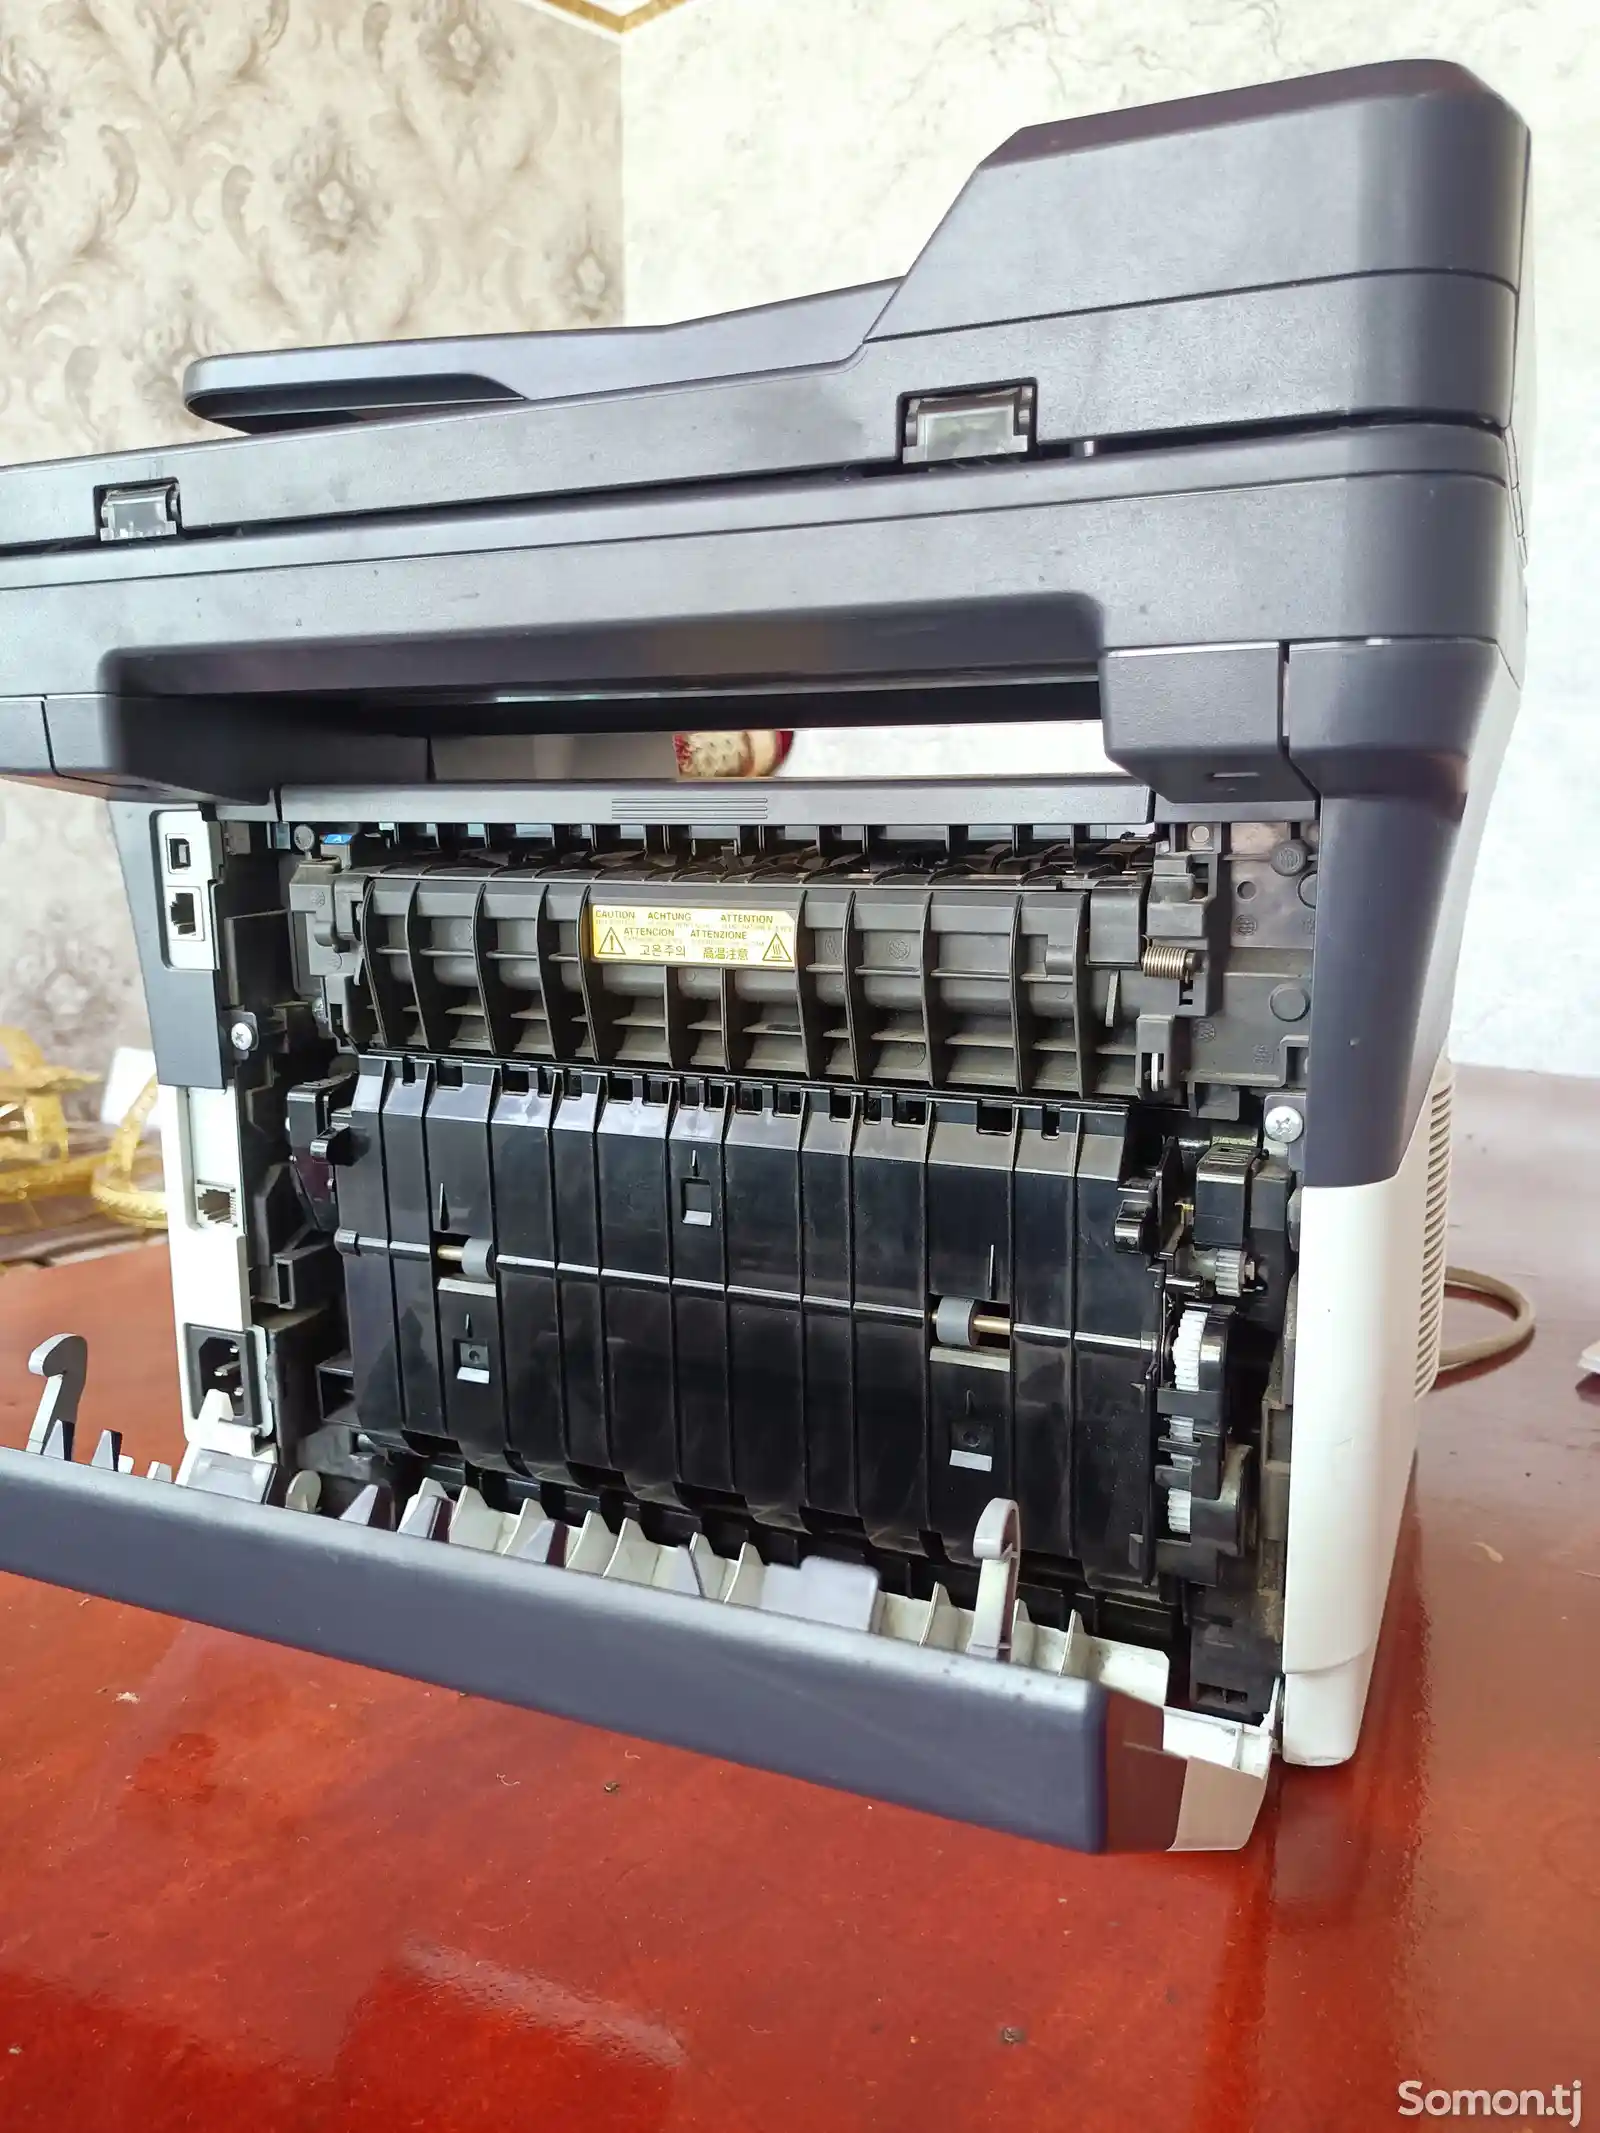 Принтер,сканер,копир.Ecosys-1125 MFP. Kyocera-3